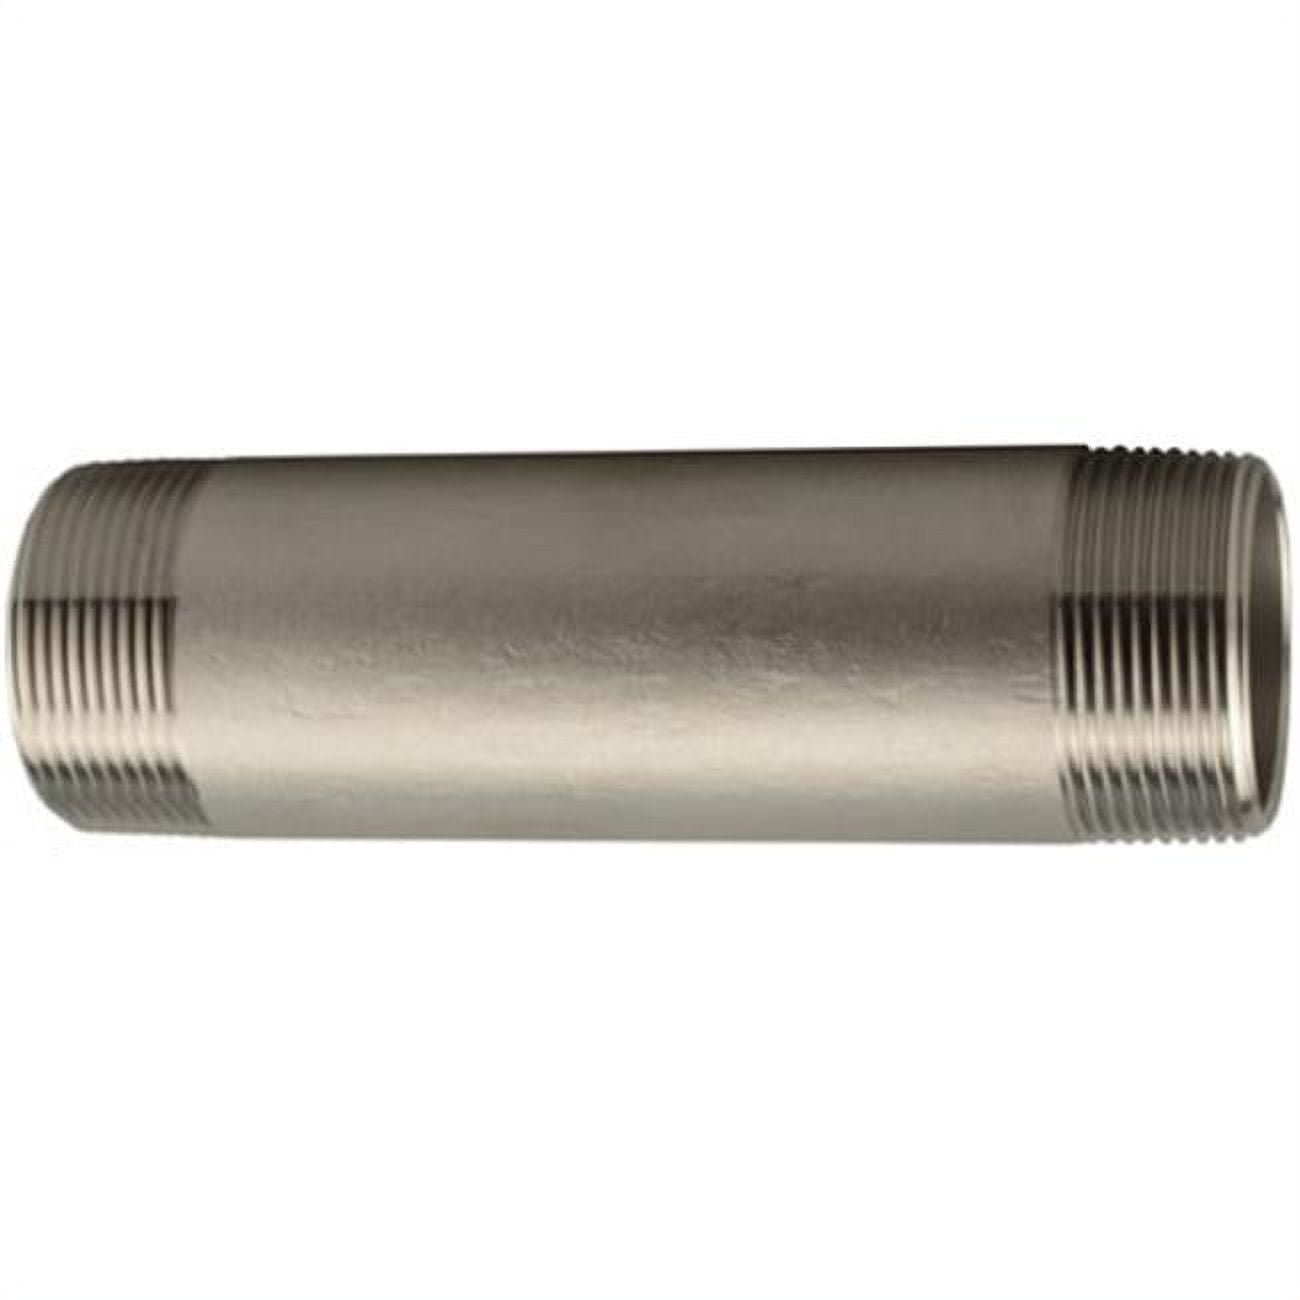 U2-ssn-0720 0.75 X 2 In. 304 Stainless Steel Nipple